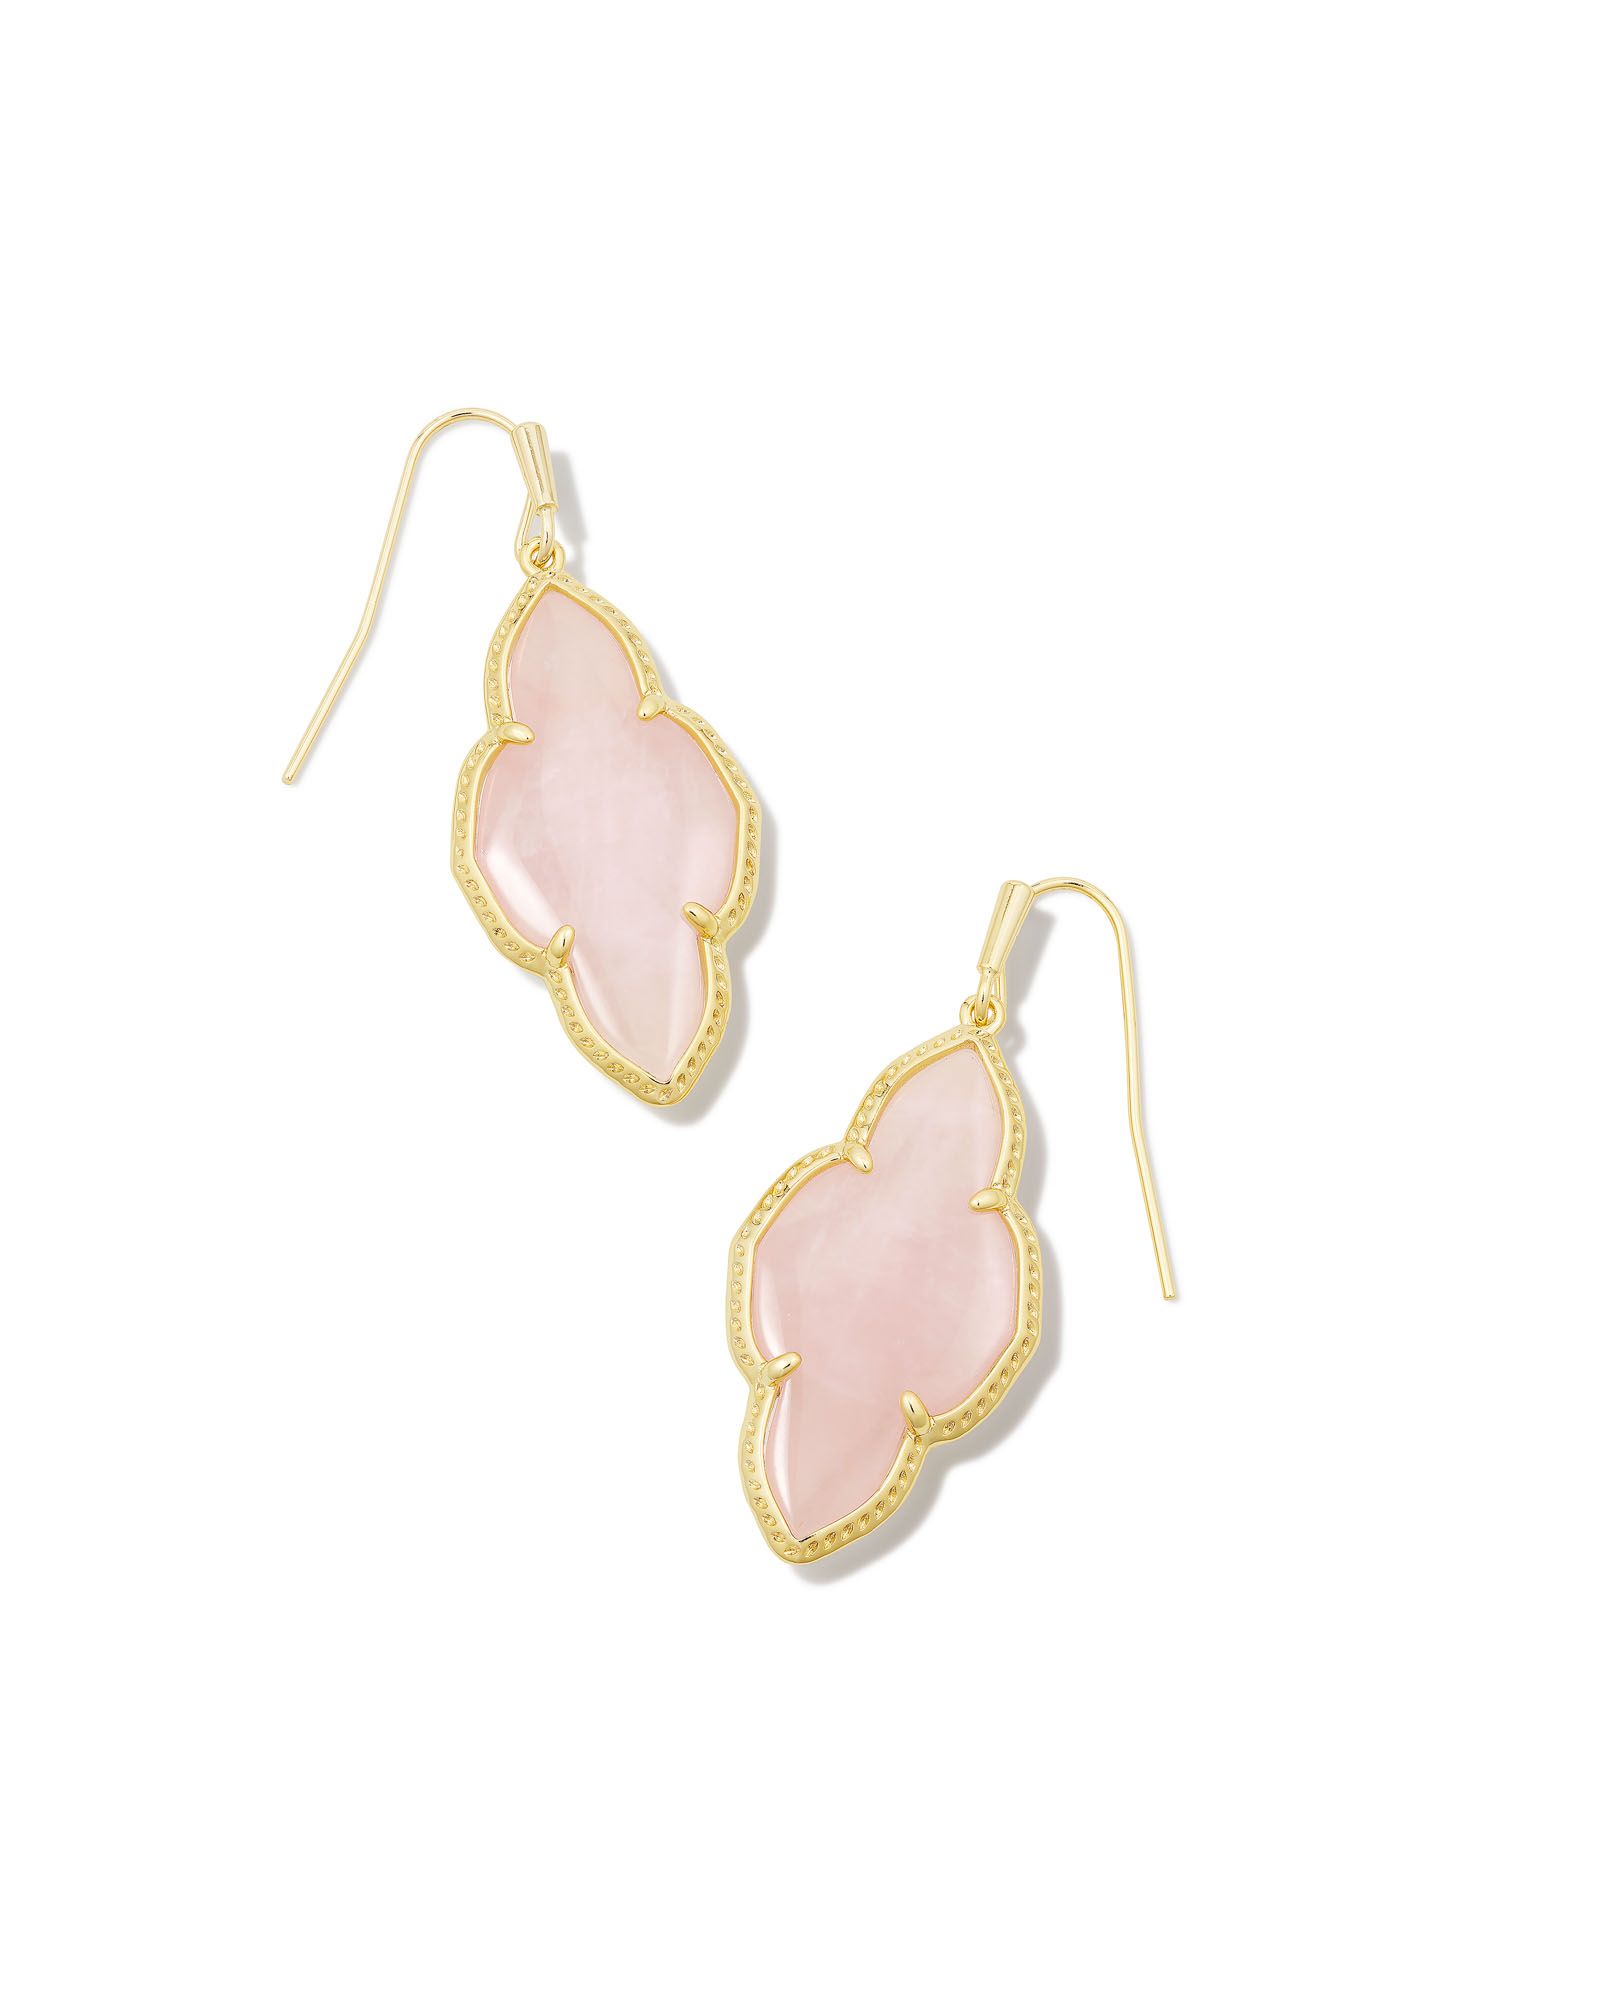 Abbie Gold Drop Earrings in Rose Quartz | Kendra Scott